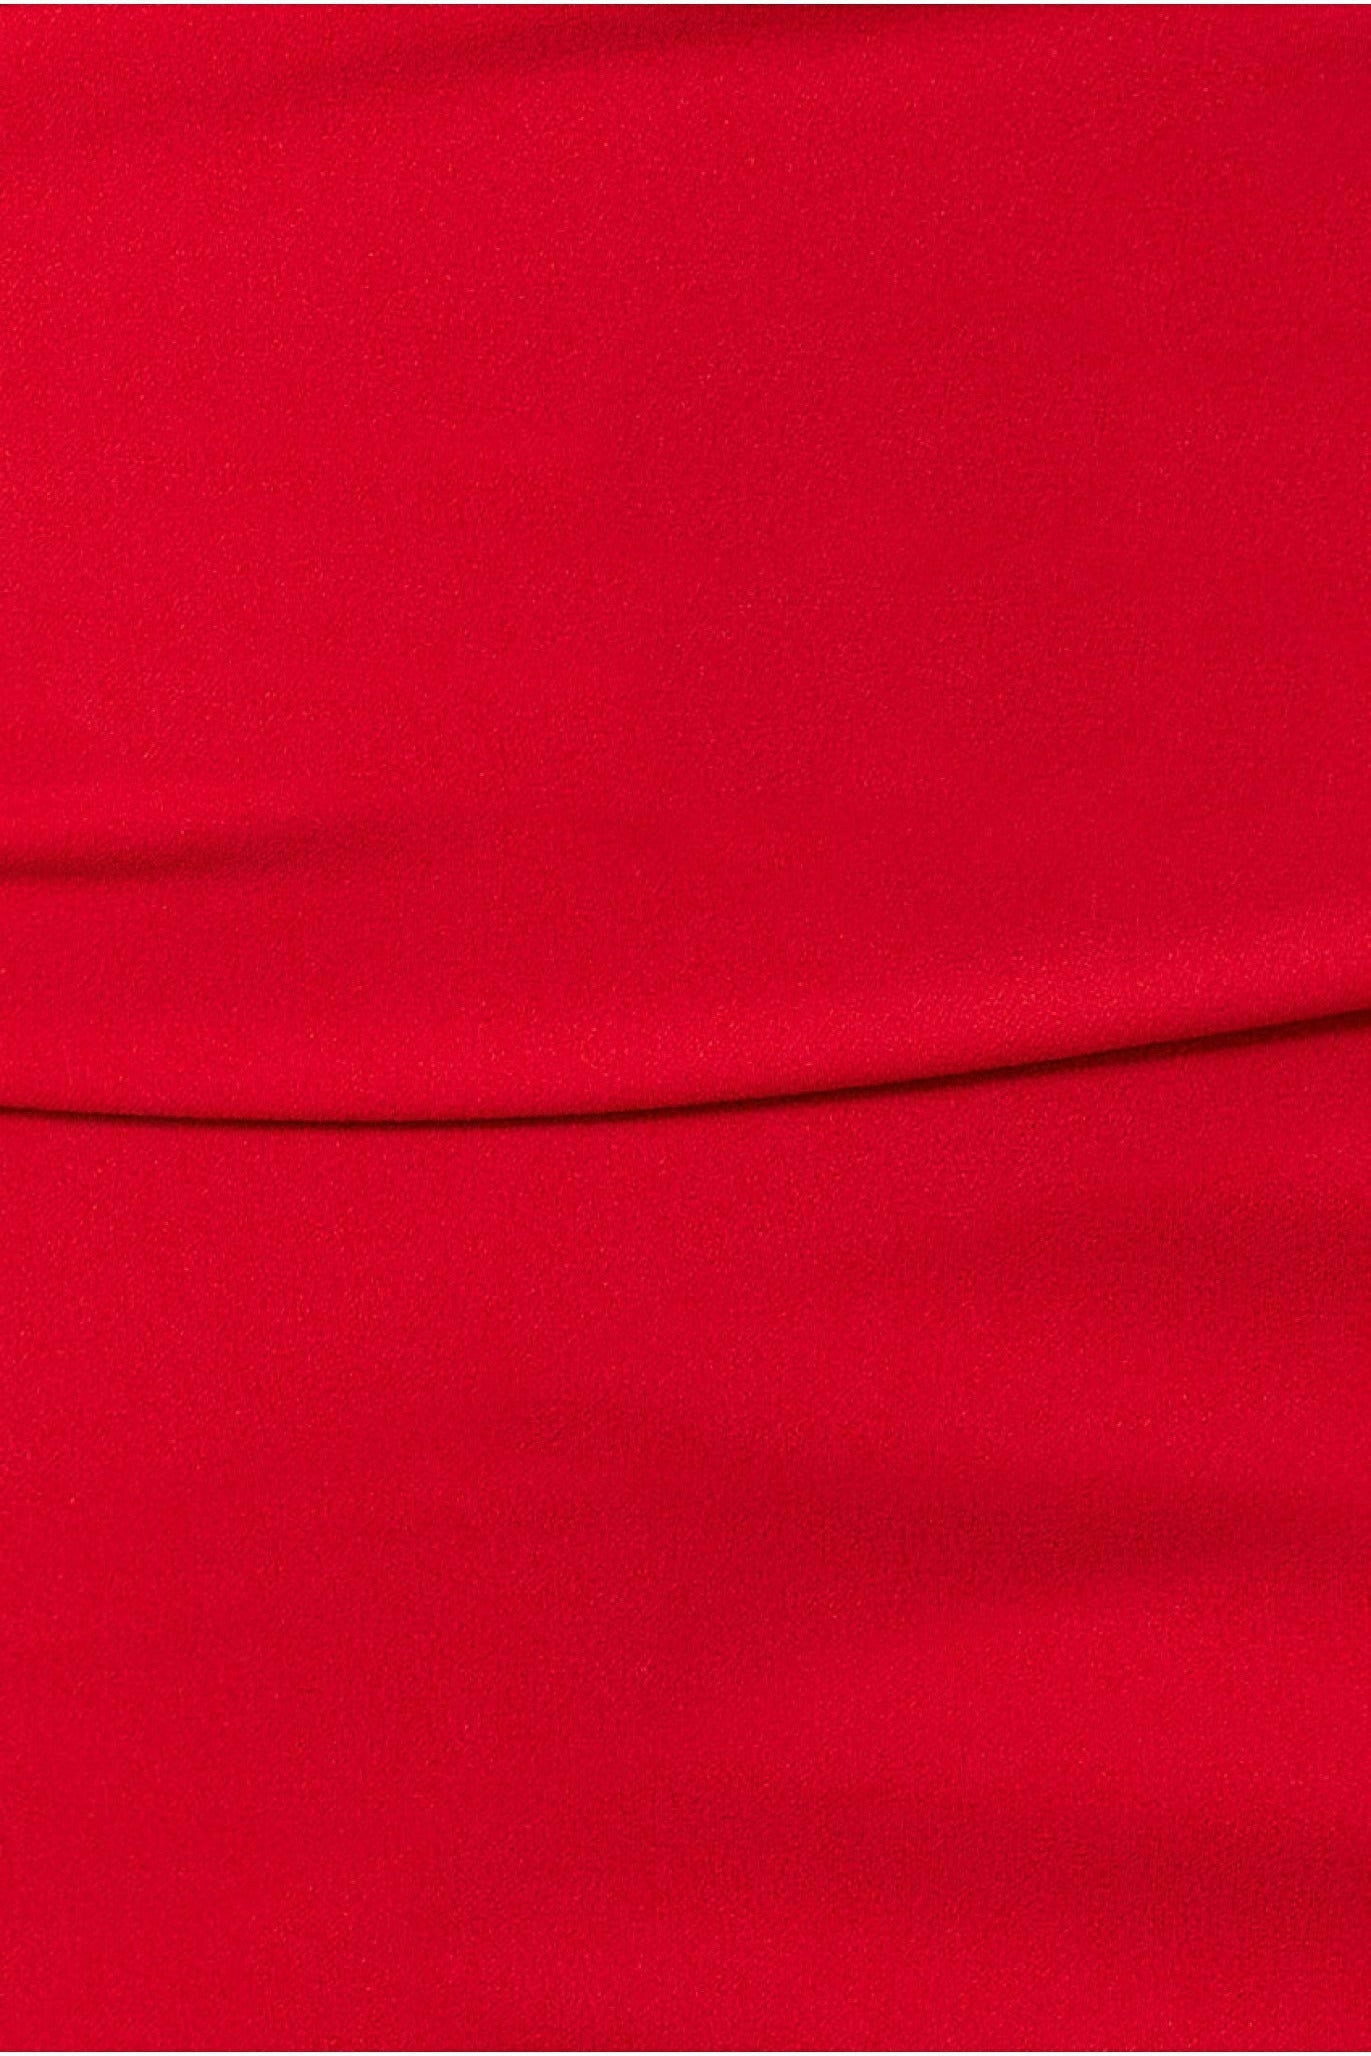 Bardot Pleated Maxi Dress - Red DR1092P